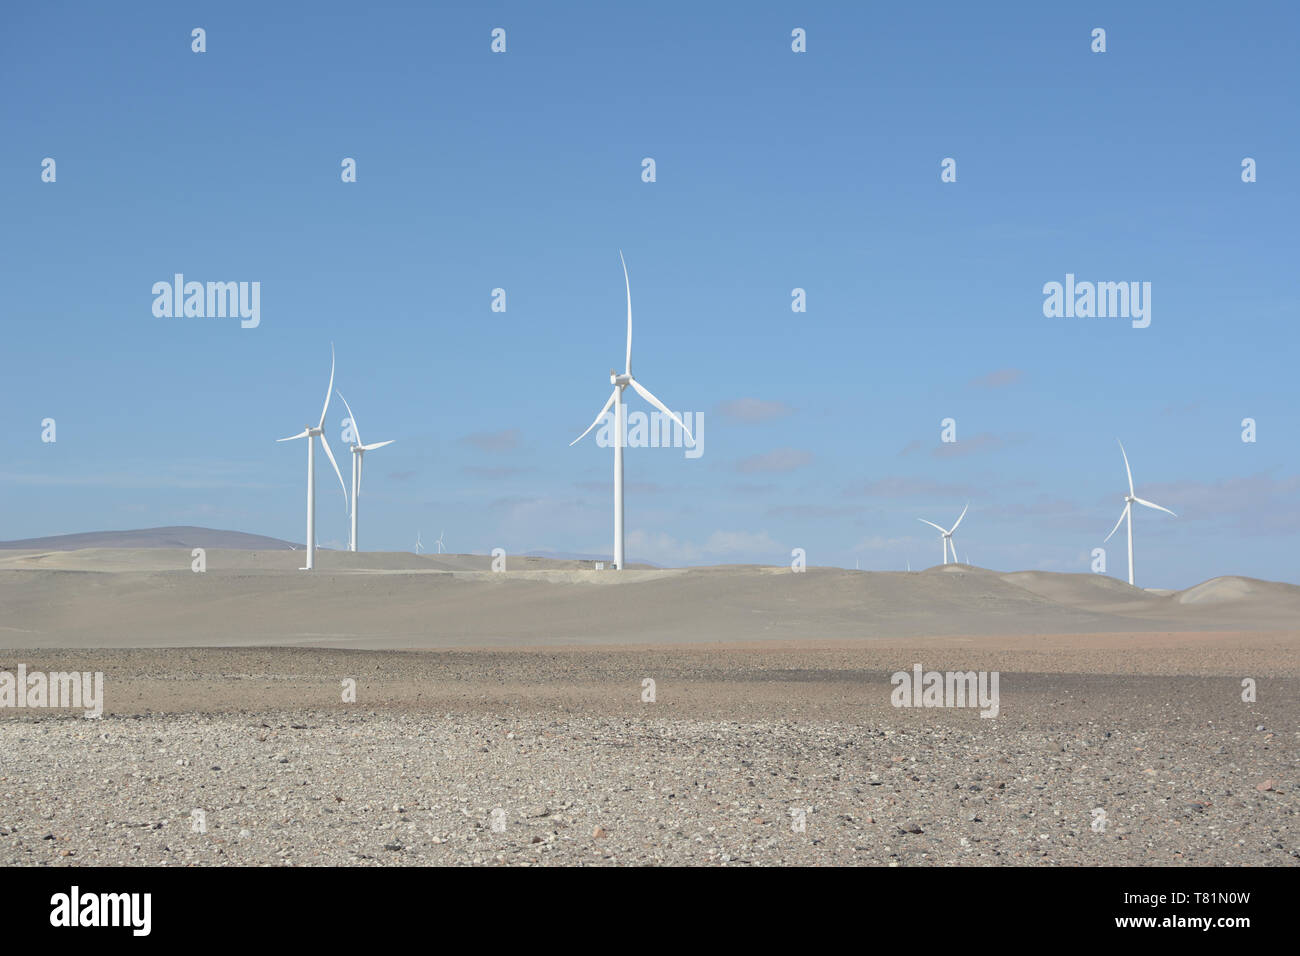 Wind power turbines in the desert Stock Photo